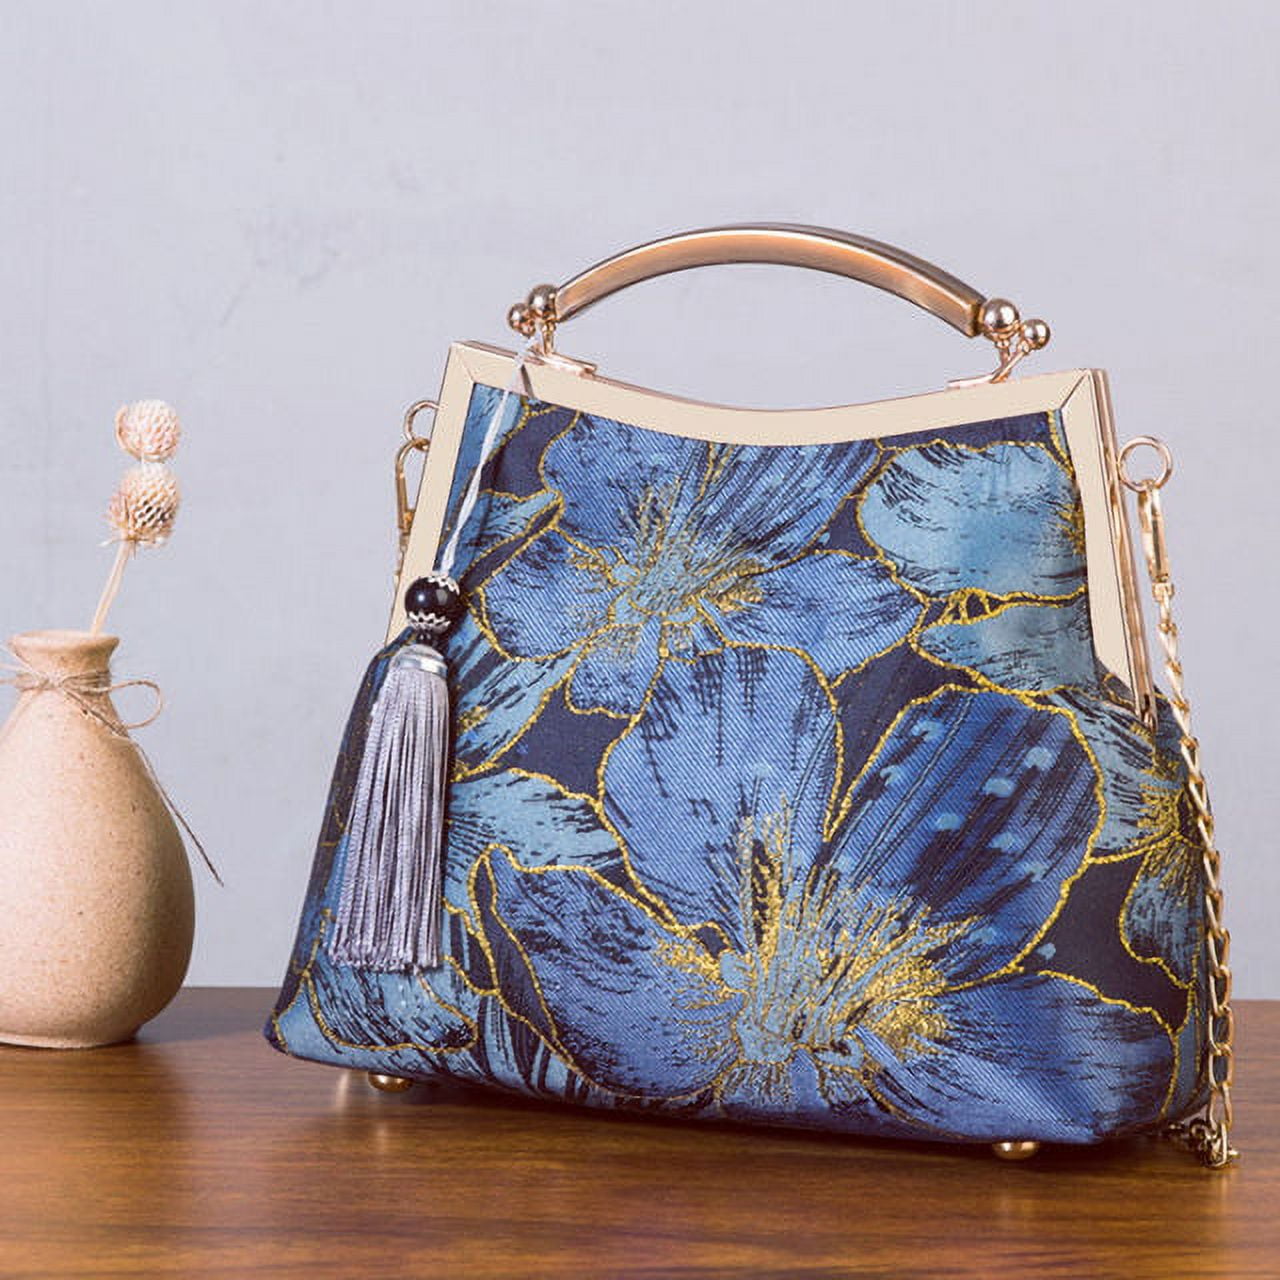 Japan Style Bags Pure Handmade Chic Lady Women's Handbags Lock